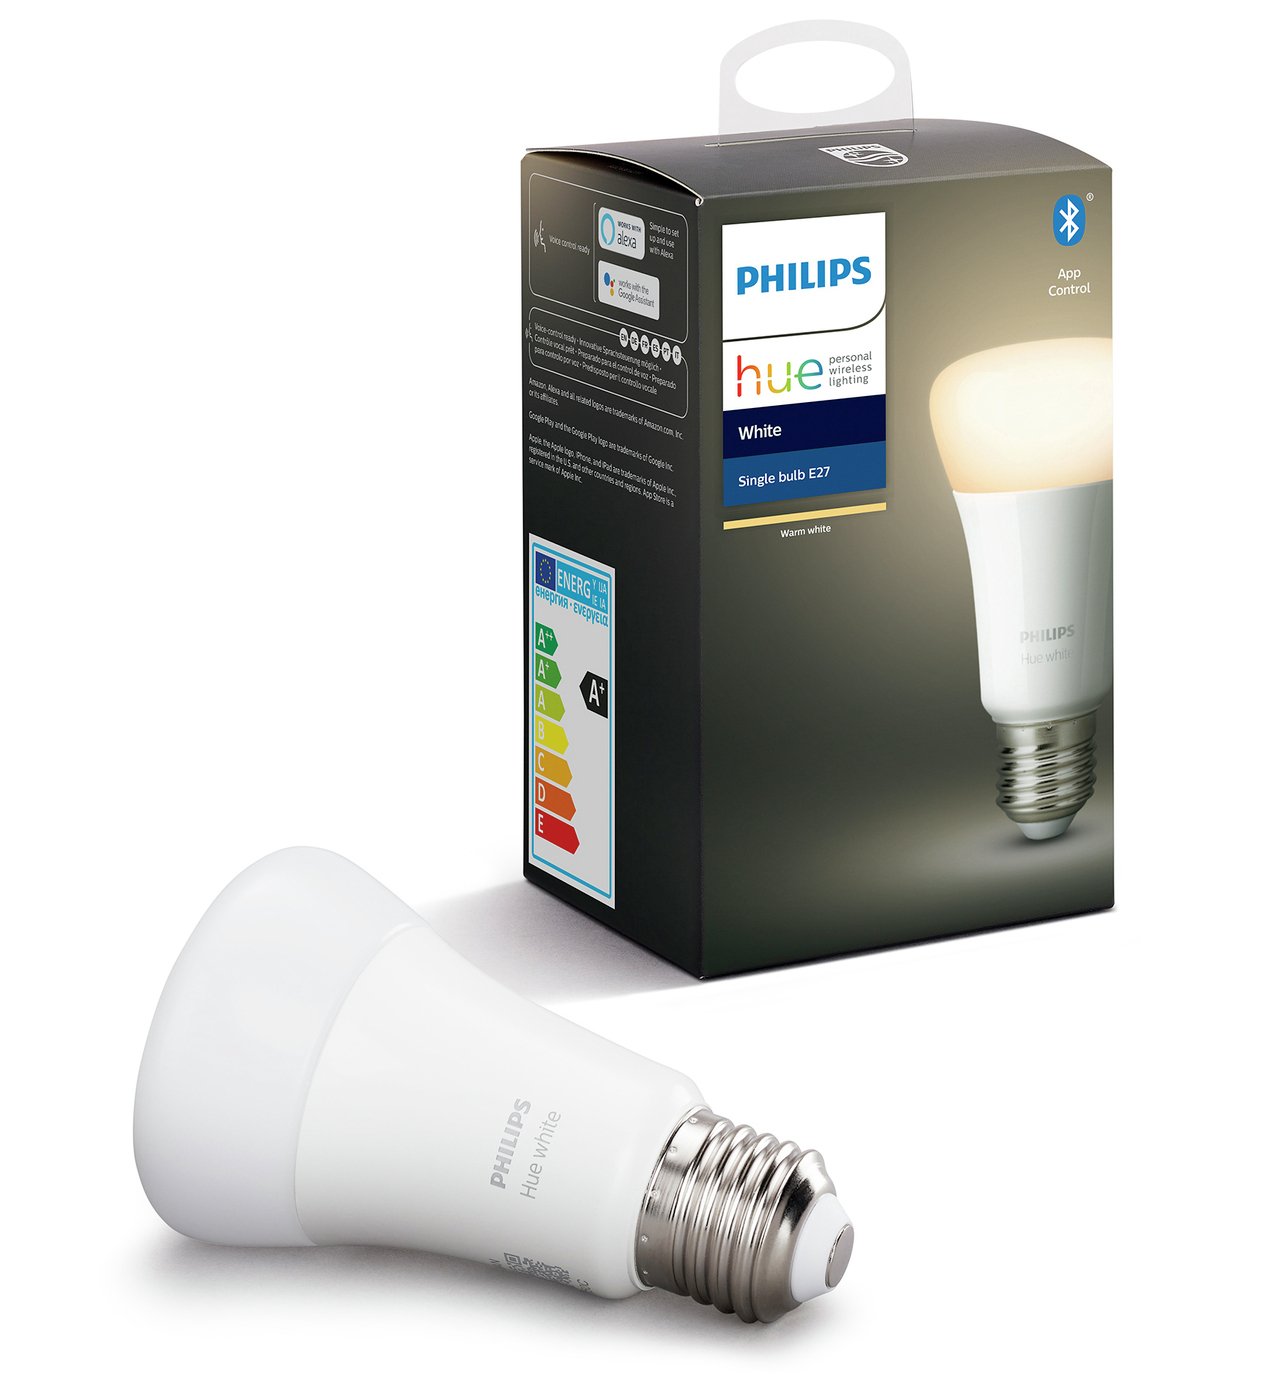 Philips Hue E27 White Smart Bulb with Bluetooth